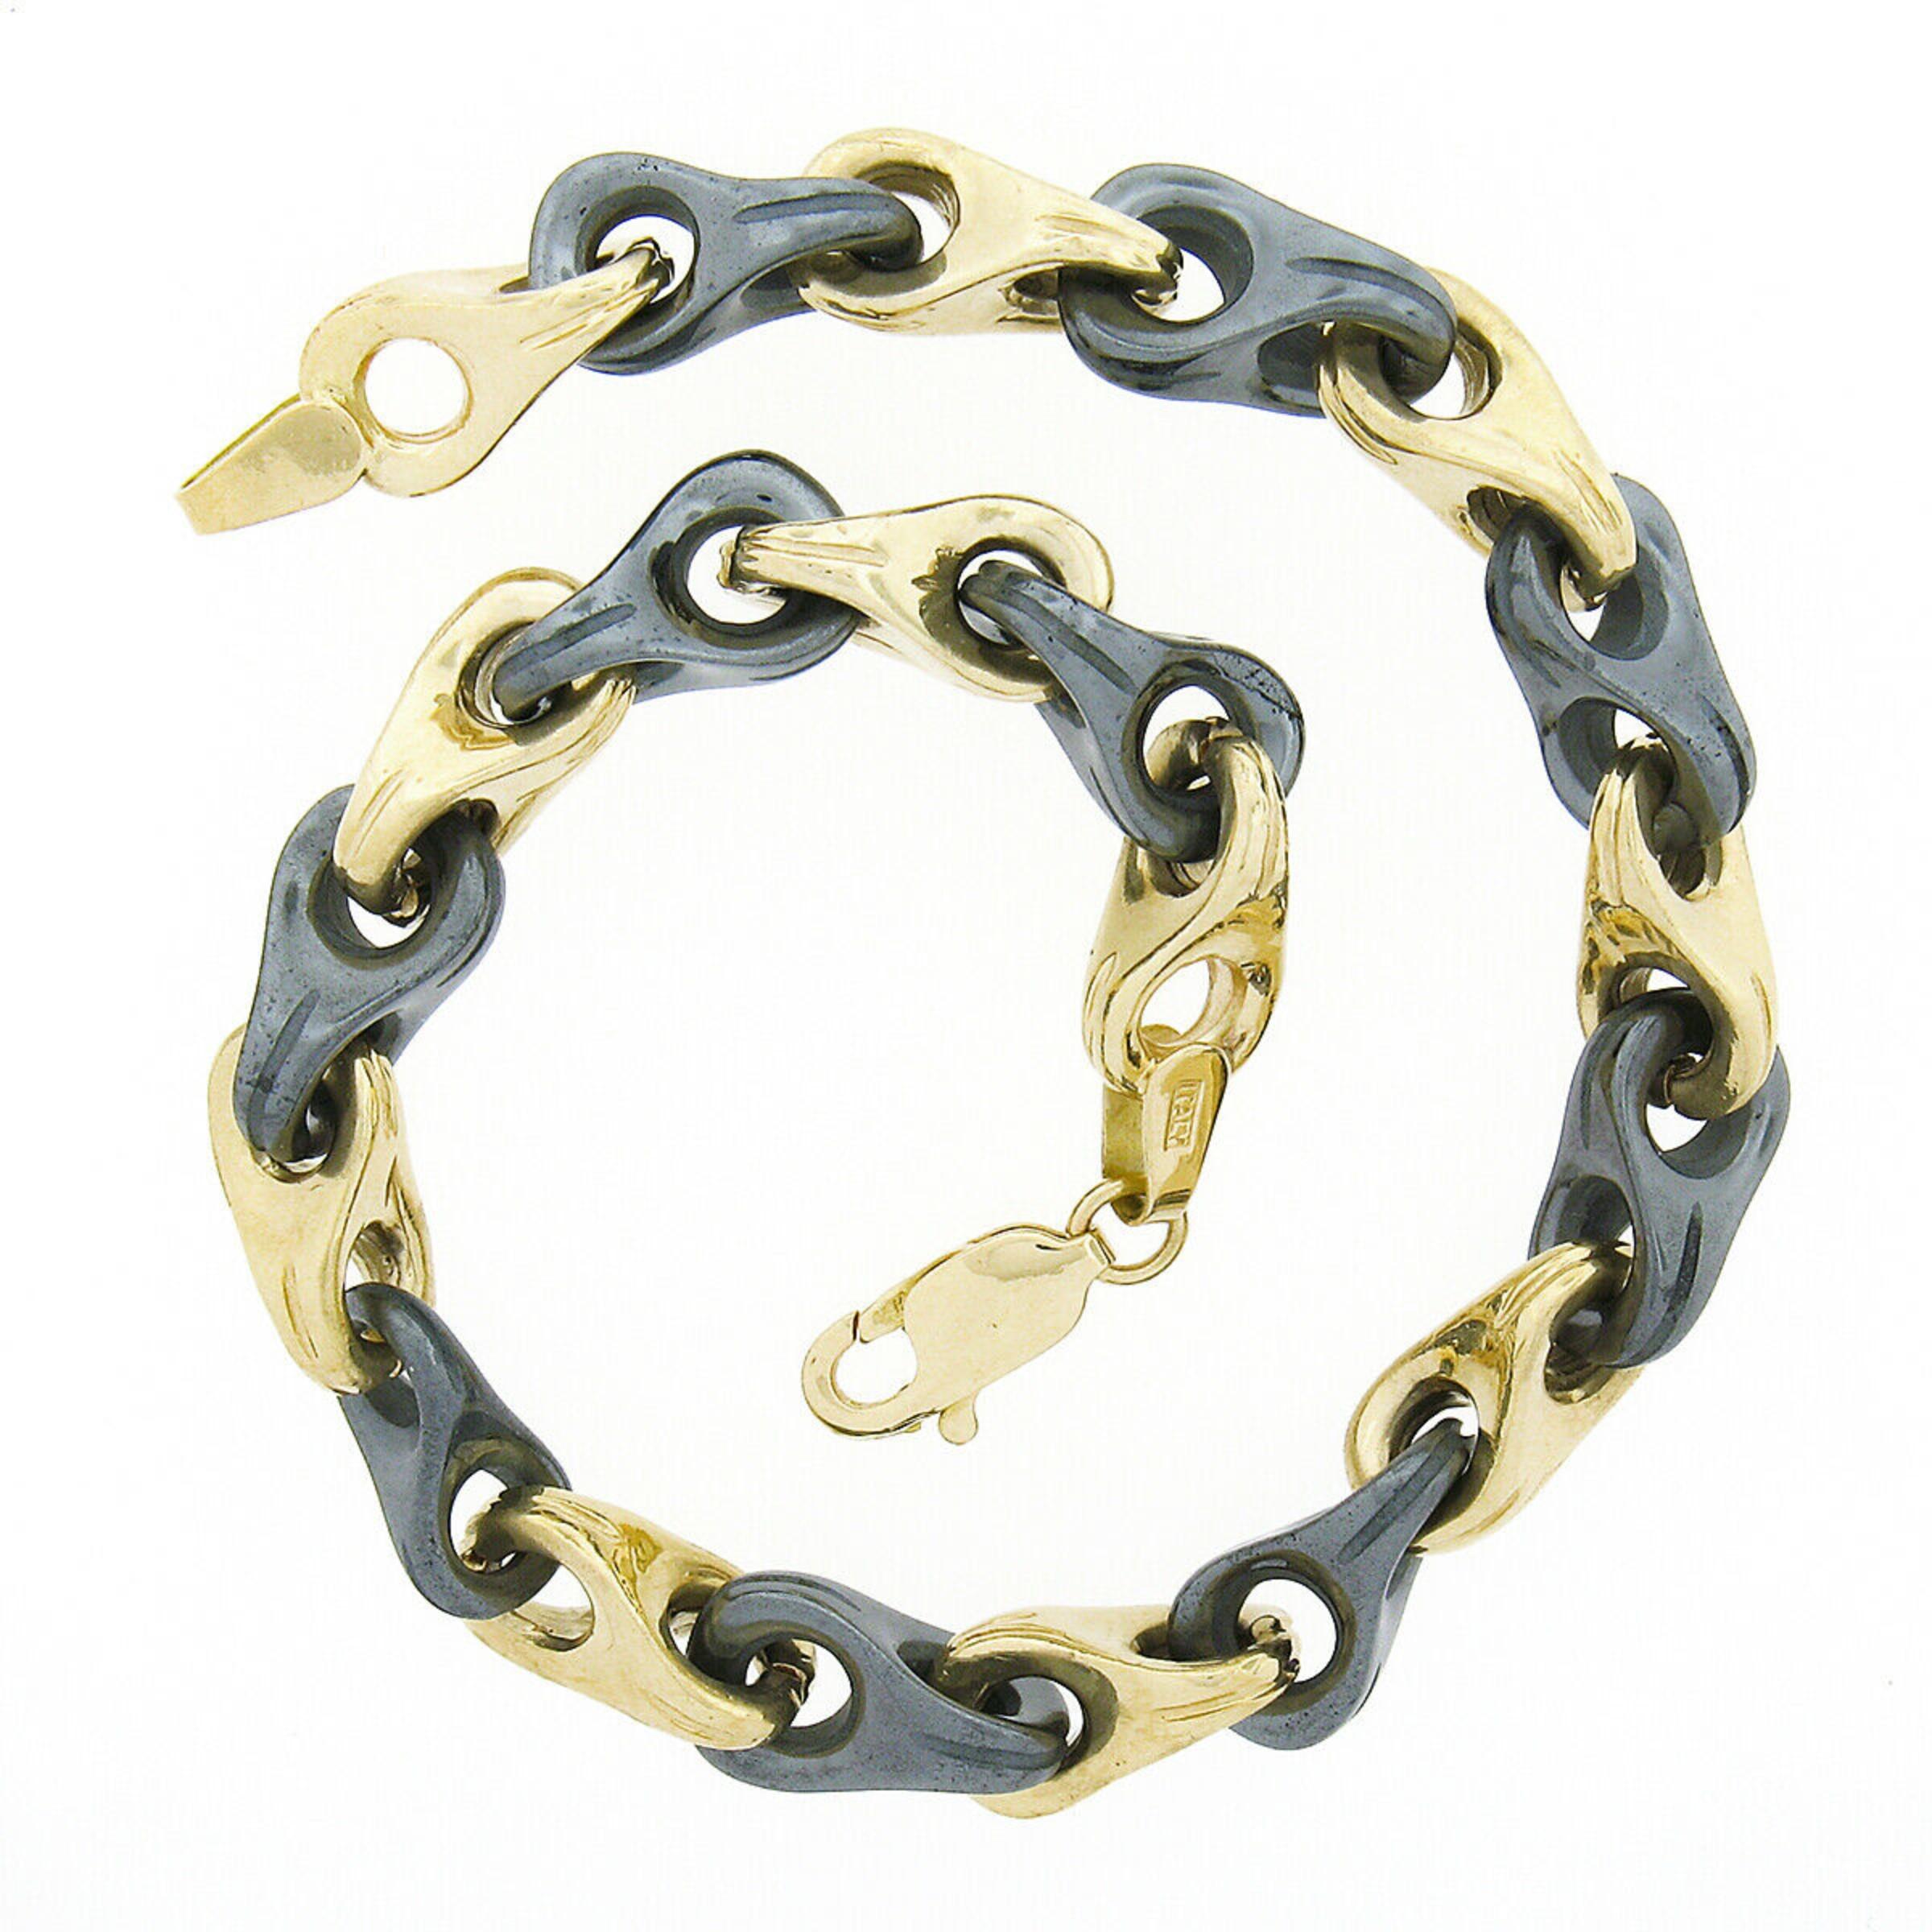 Vintage Italian Unisex Alternating Solid 14k Gold & Hematite Link Chain Bracelet In Good Condition For Sale In Montclair, NJ